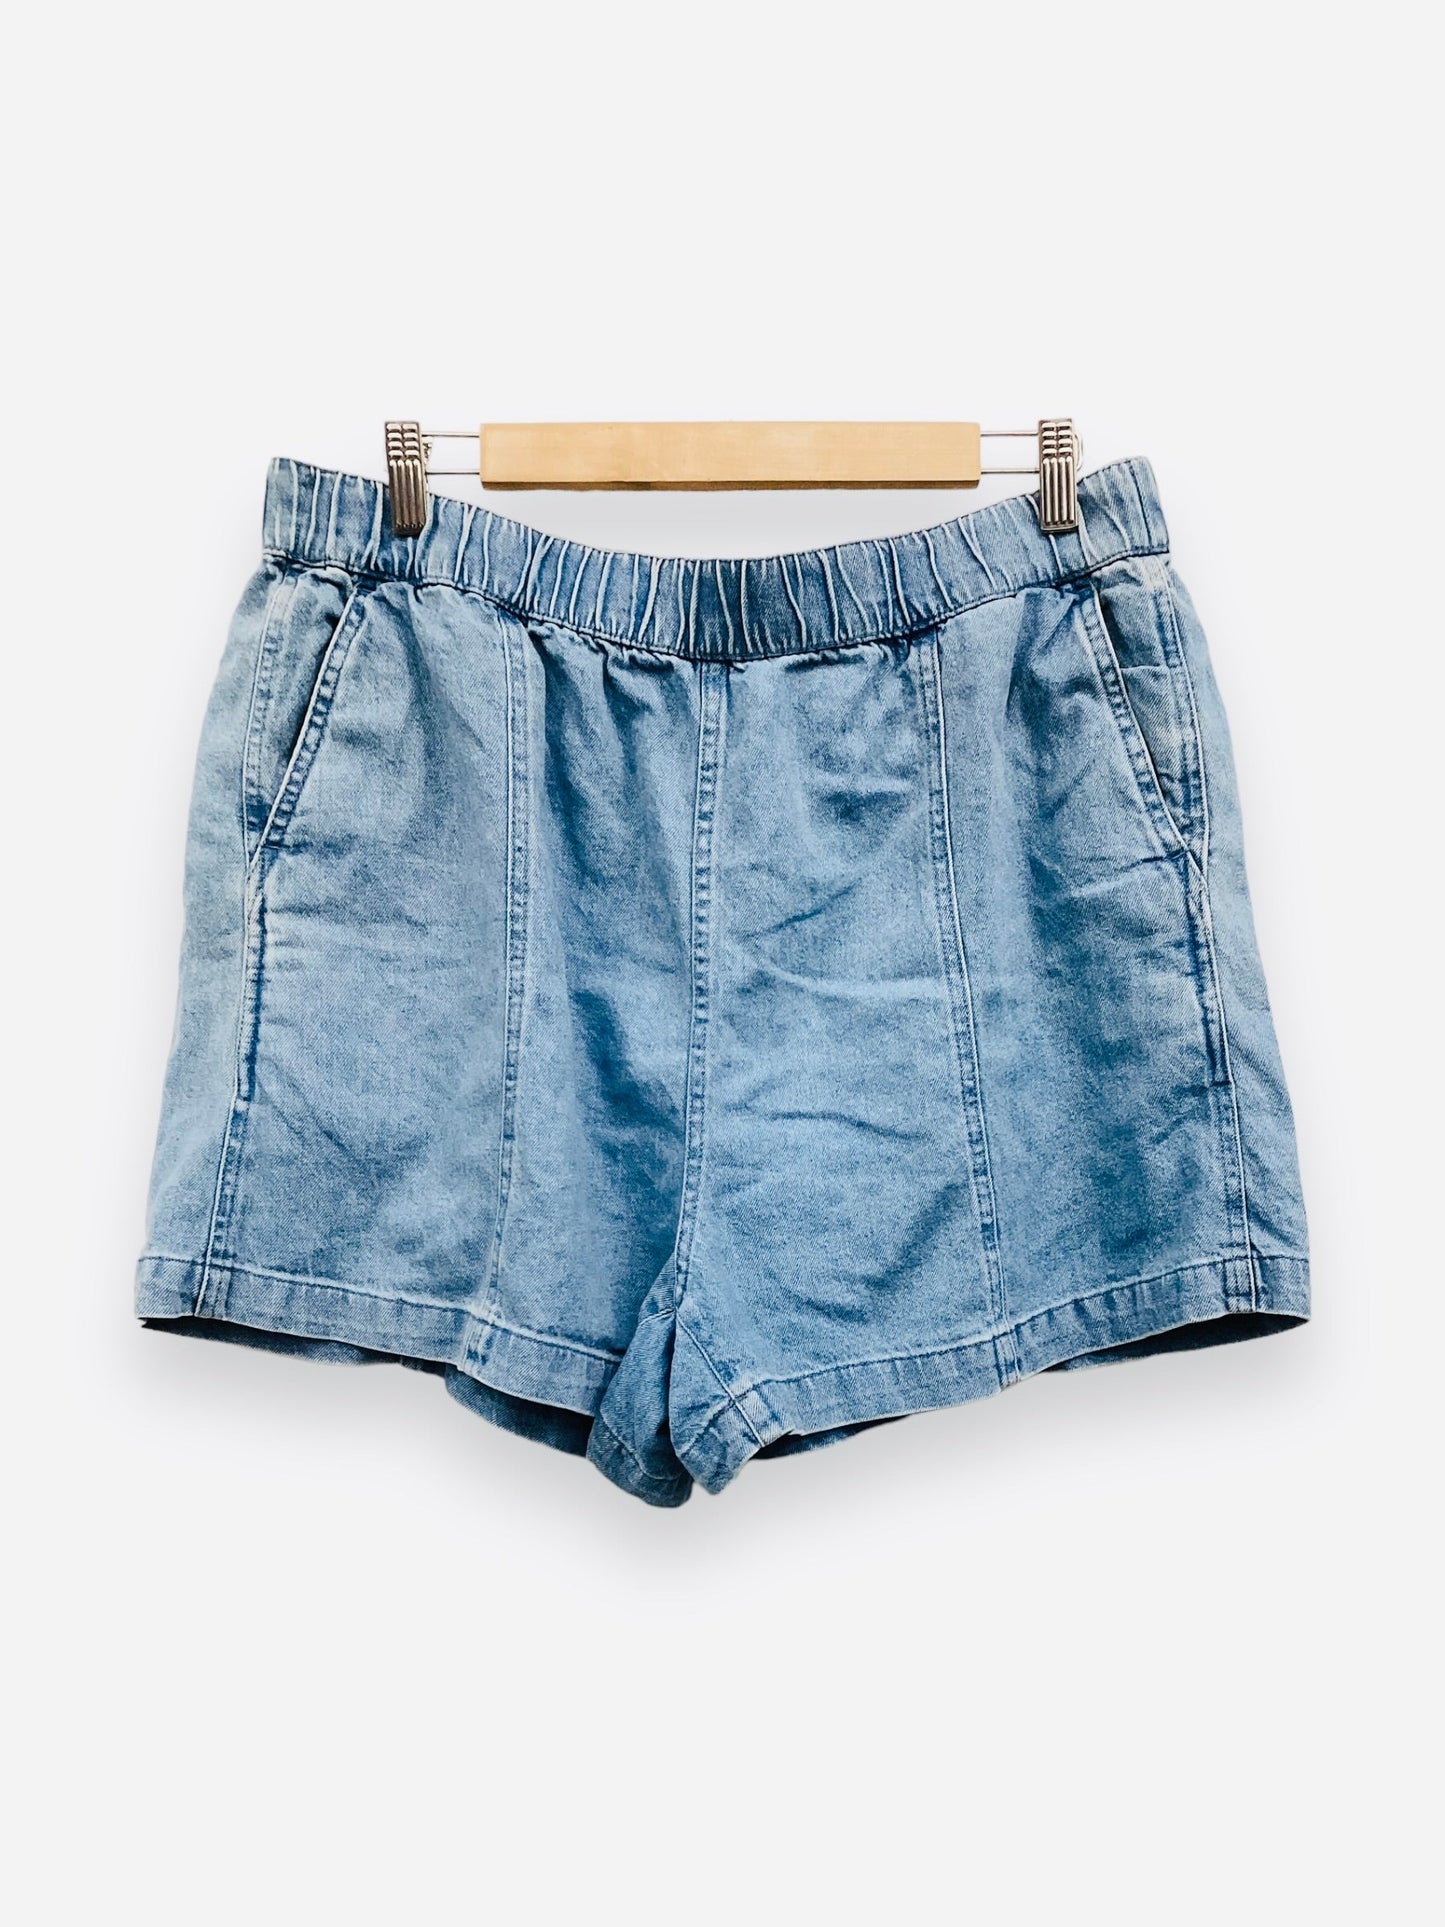 NWT Blue Denim Shorts Madewell, Size L